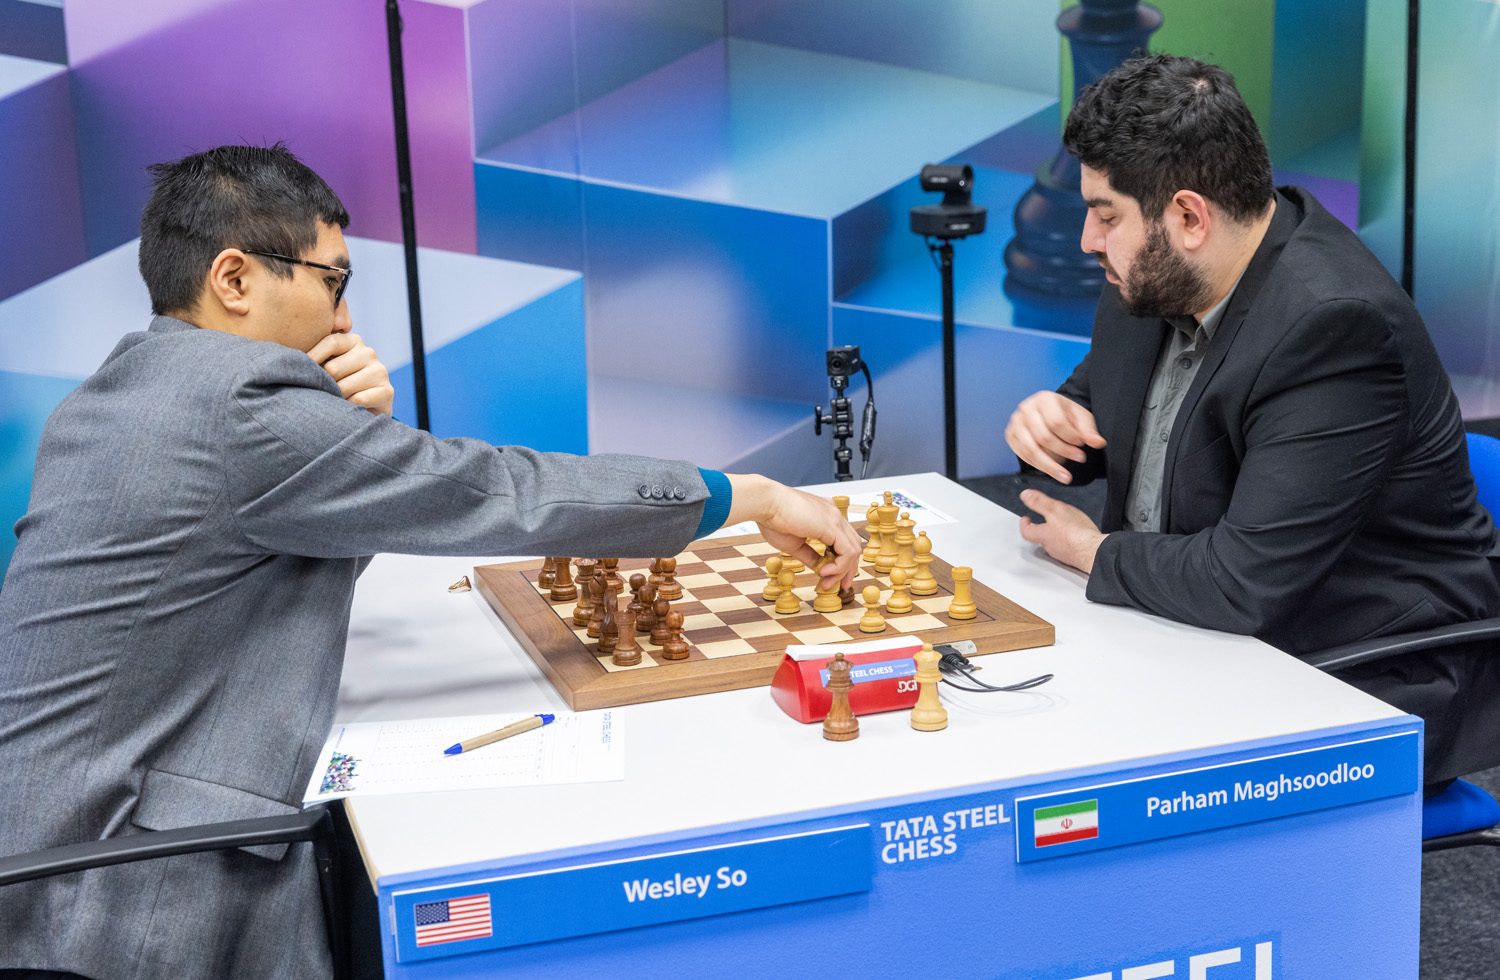 Wesley So settles for draw, Giri trips Liren in Tata chess